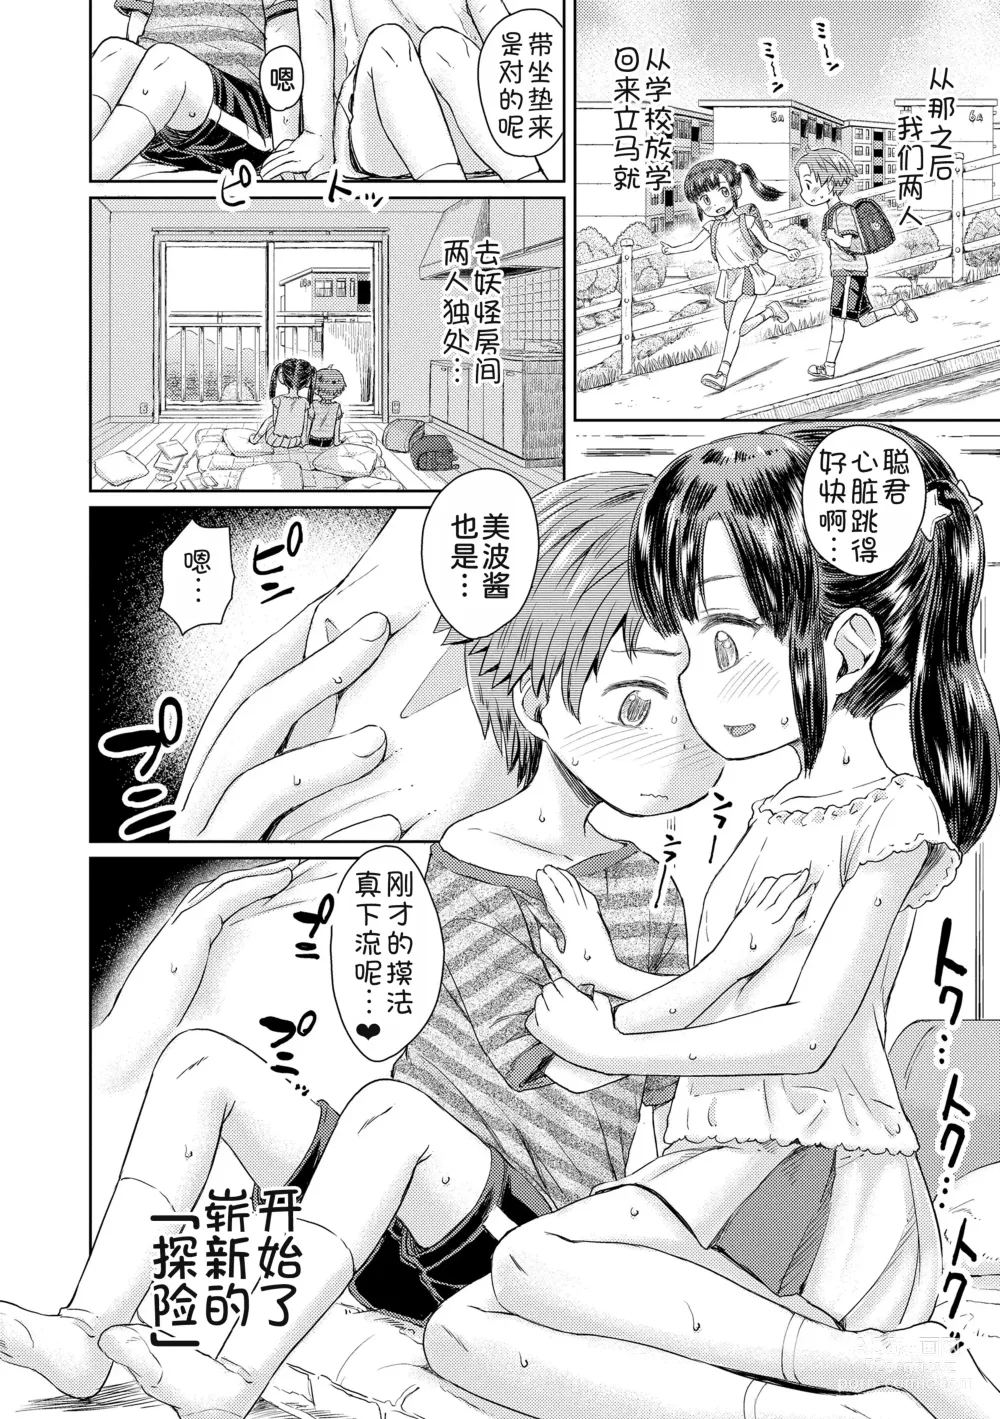 Page 7 of manga Akagane Danchi no Obake Heya Ch. 1-3